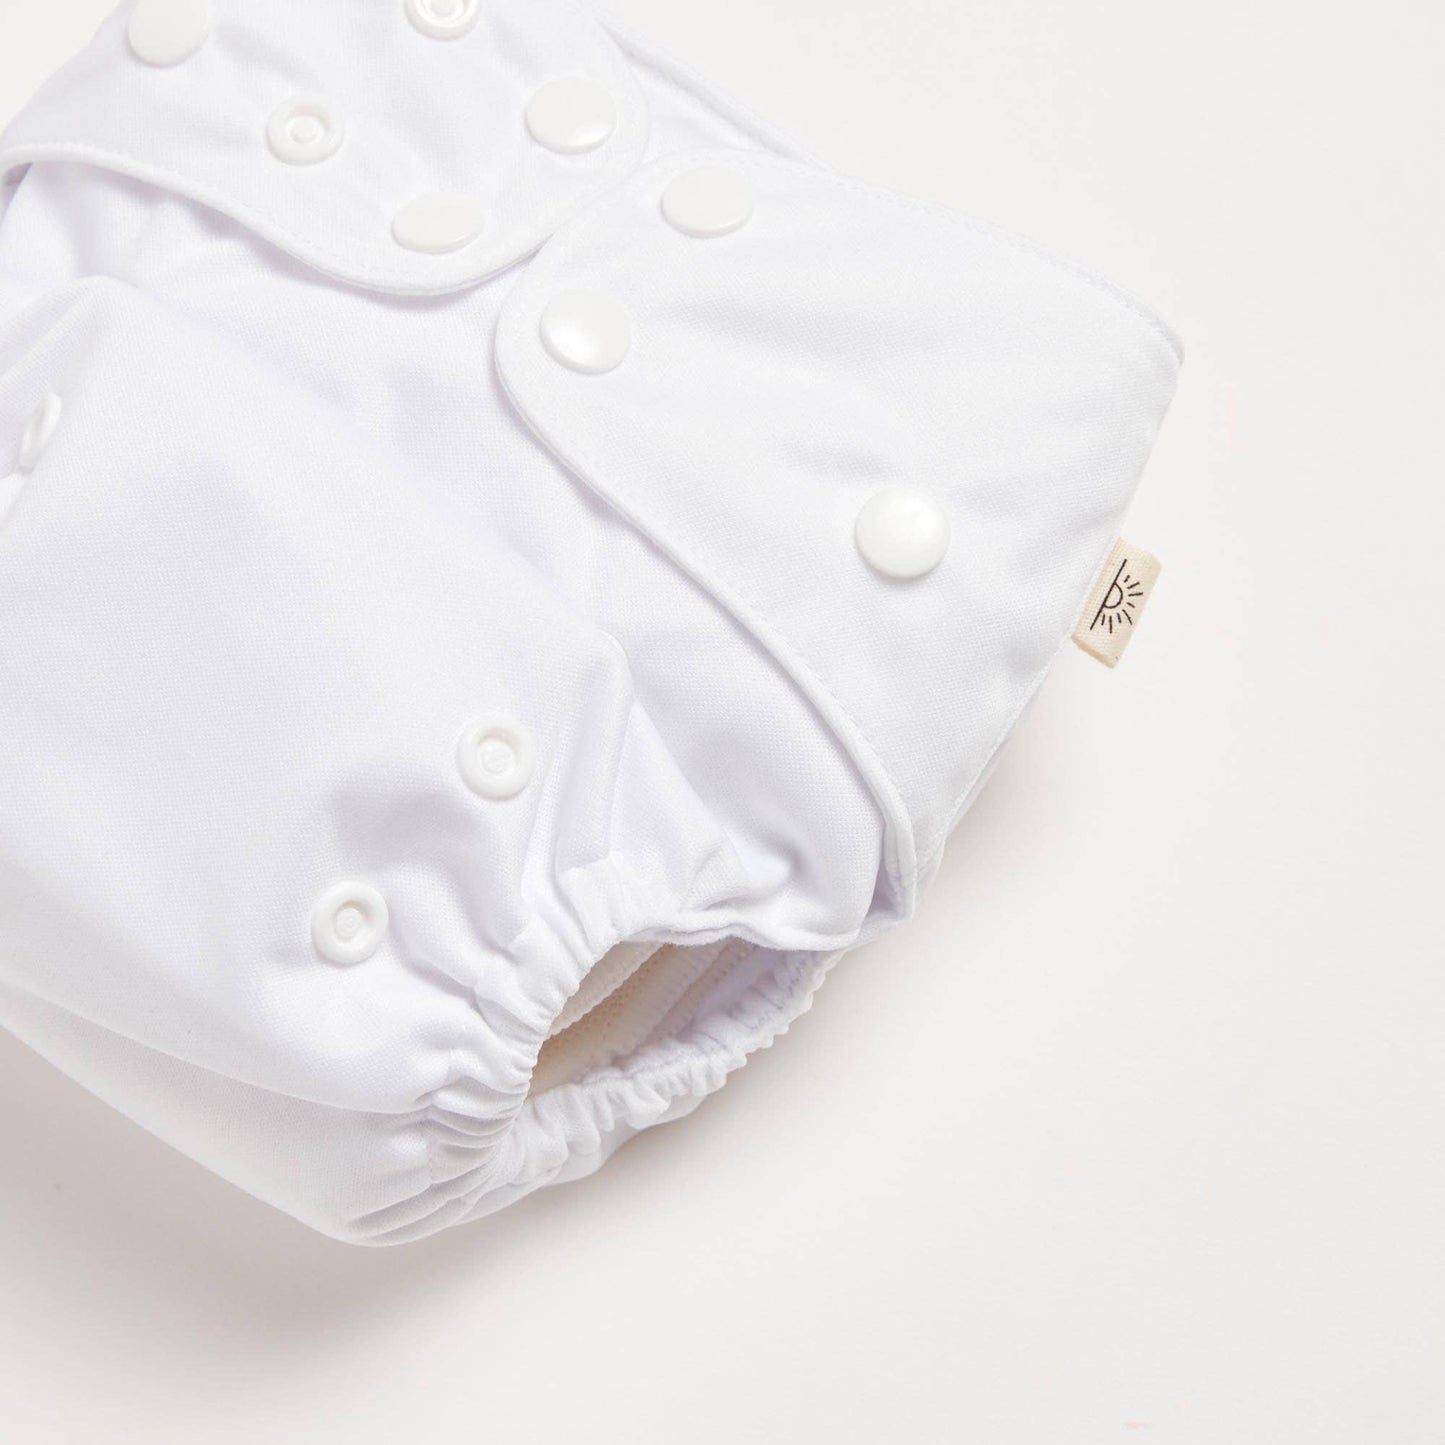 Snow White 2.0 Cloth Nappy: One-Size